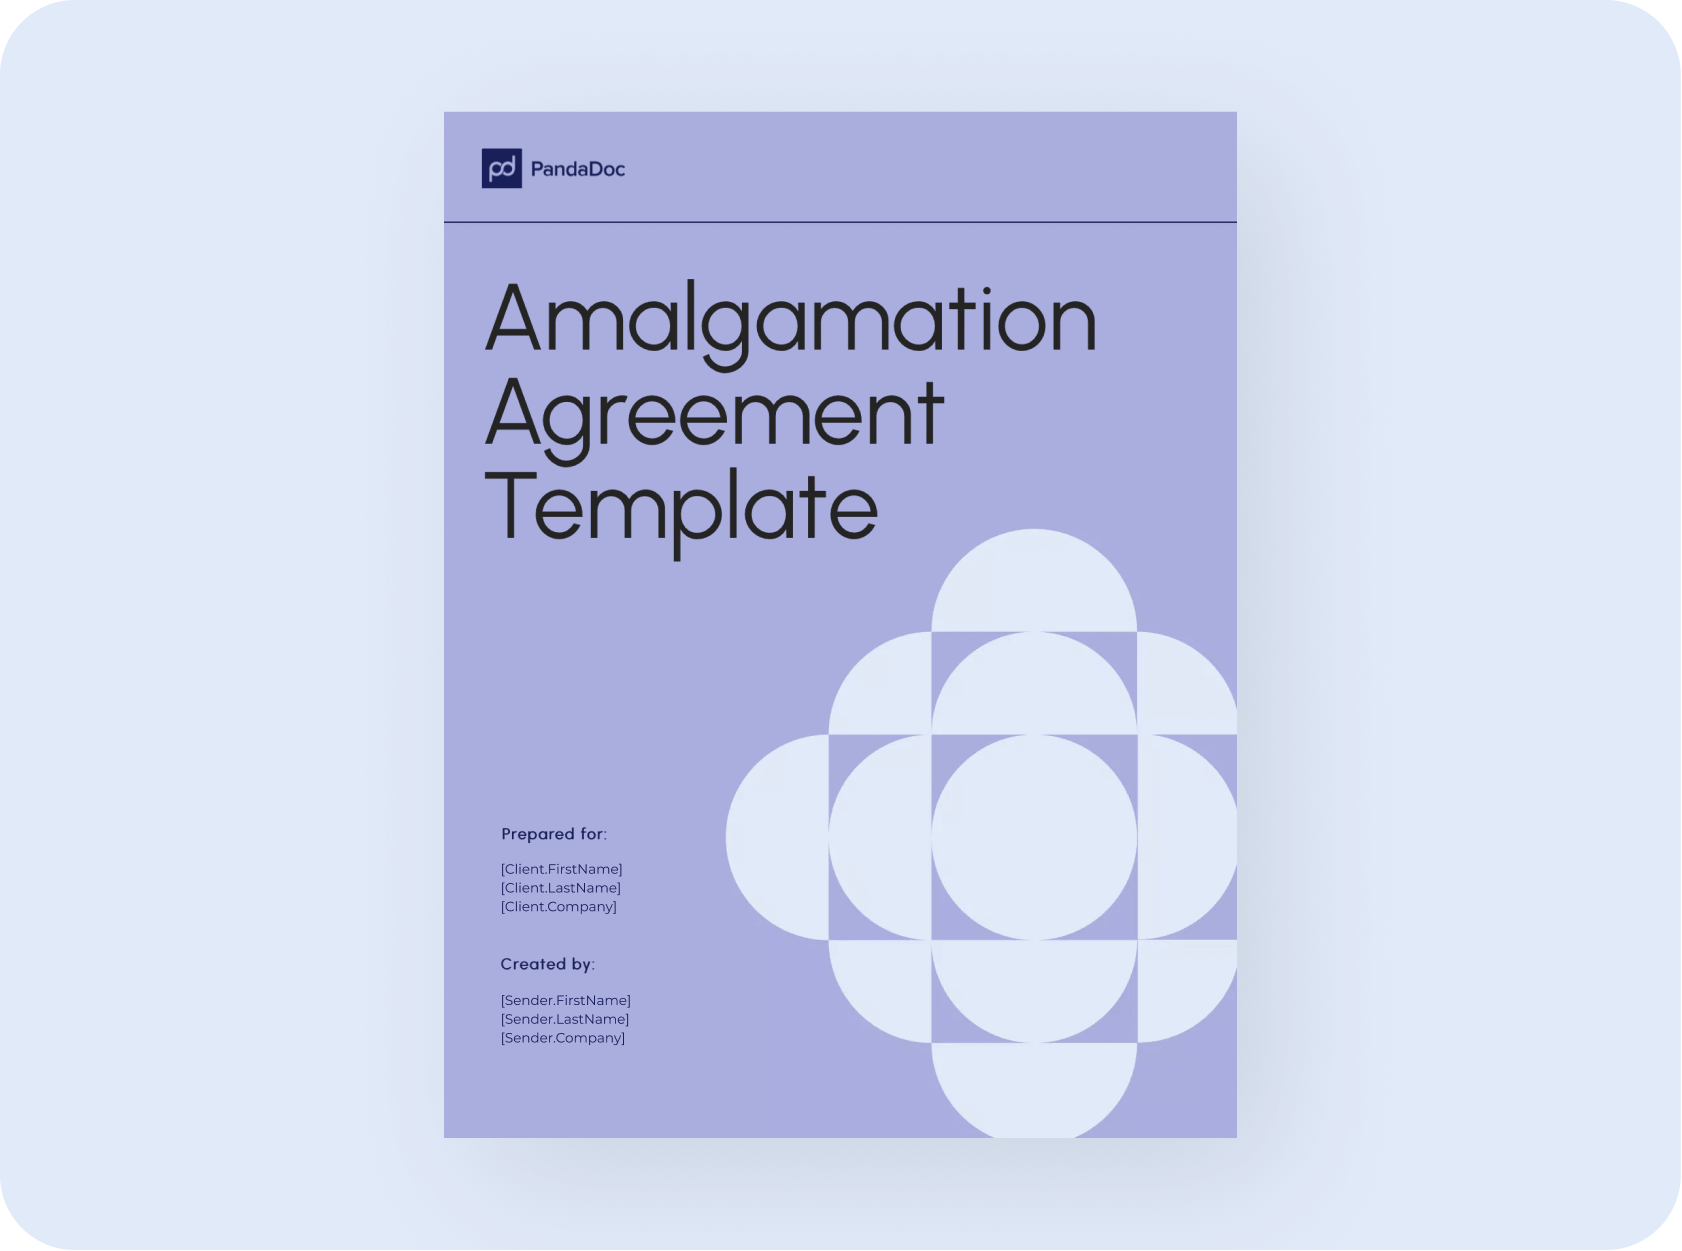 Amalgamation Agreement Template PandaDoc